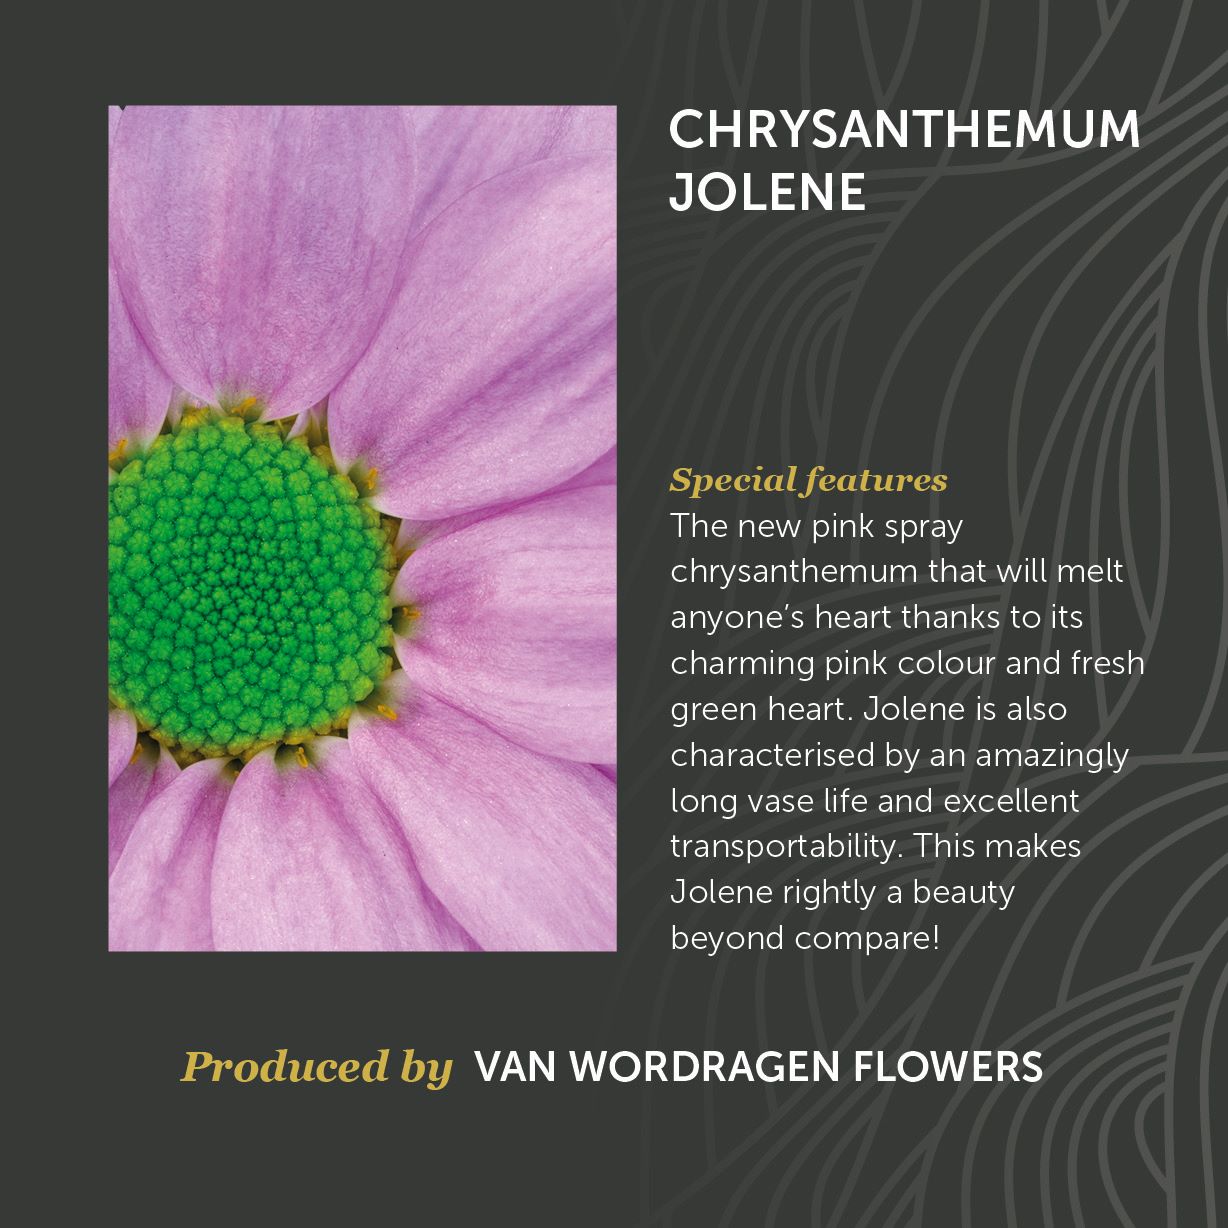 Chrysanthemum Jolene